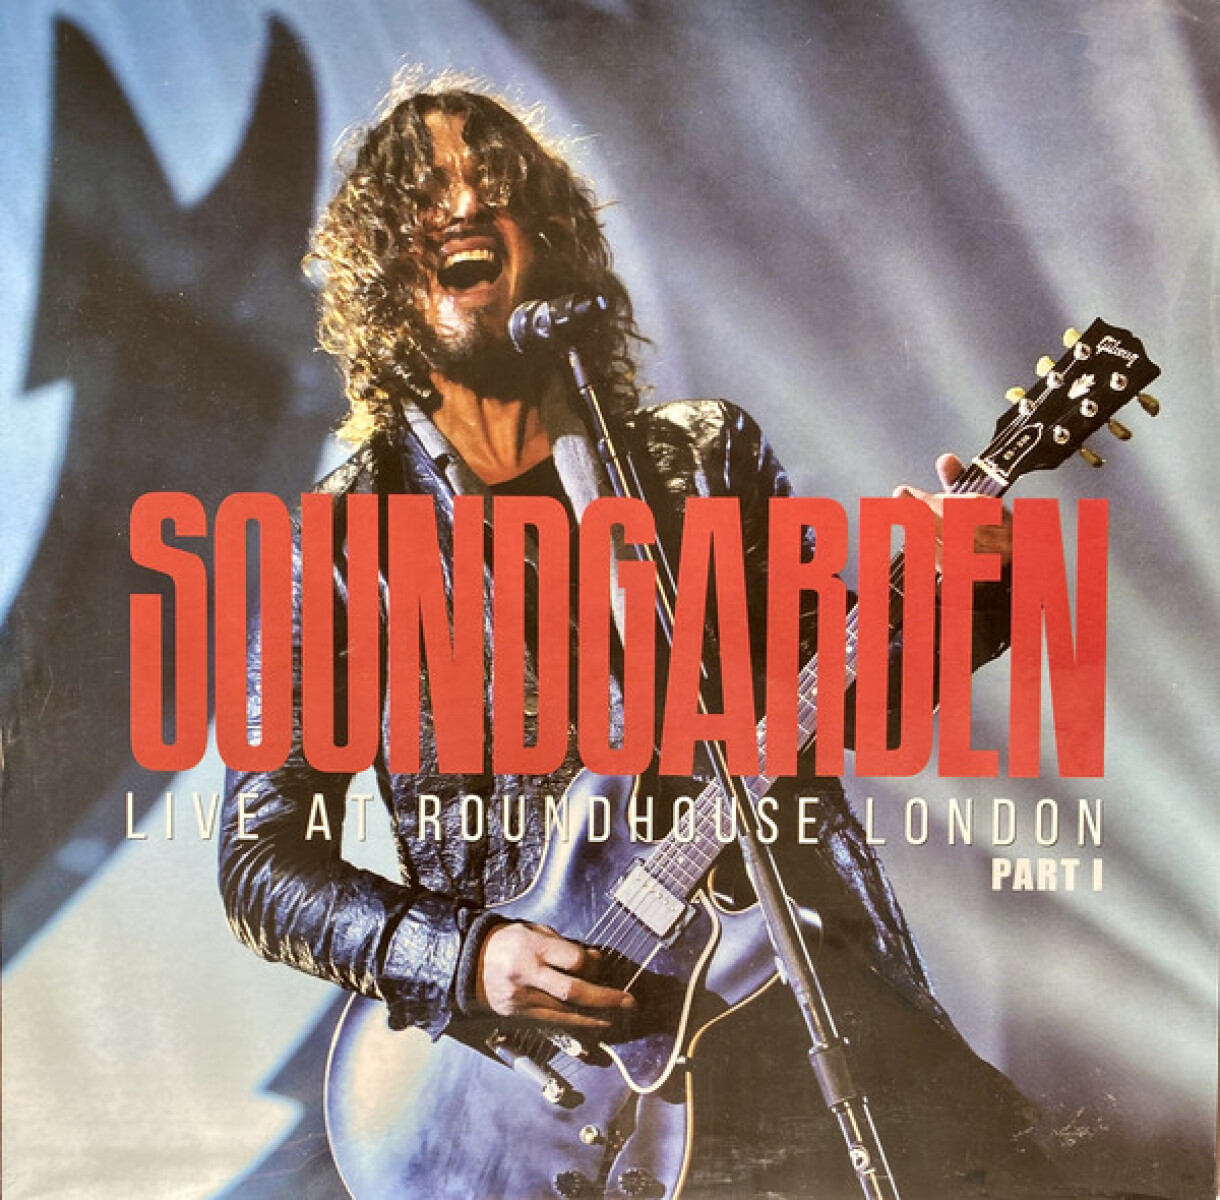 (c) Soundgarden - Live At Roundhouse London P.i - Vinilo 